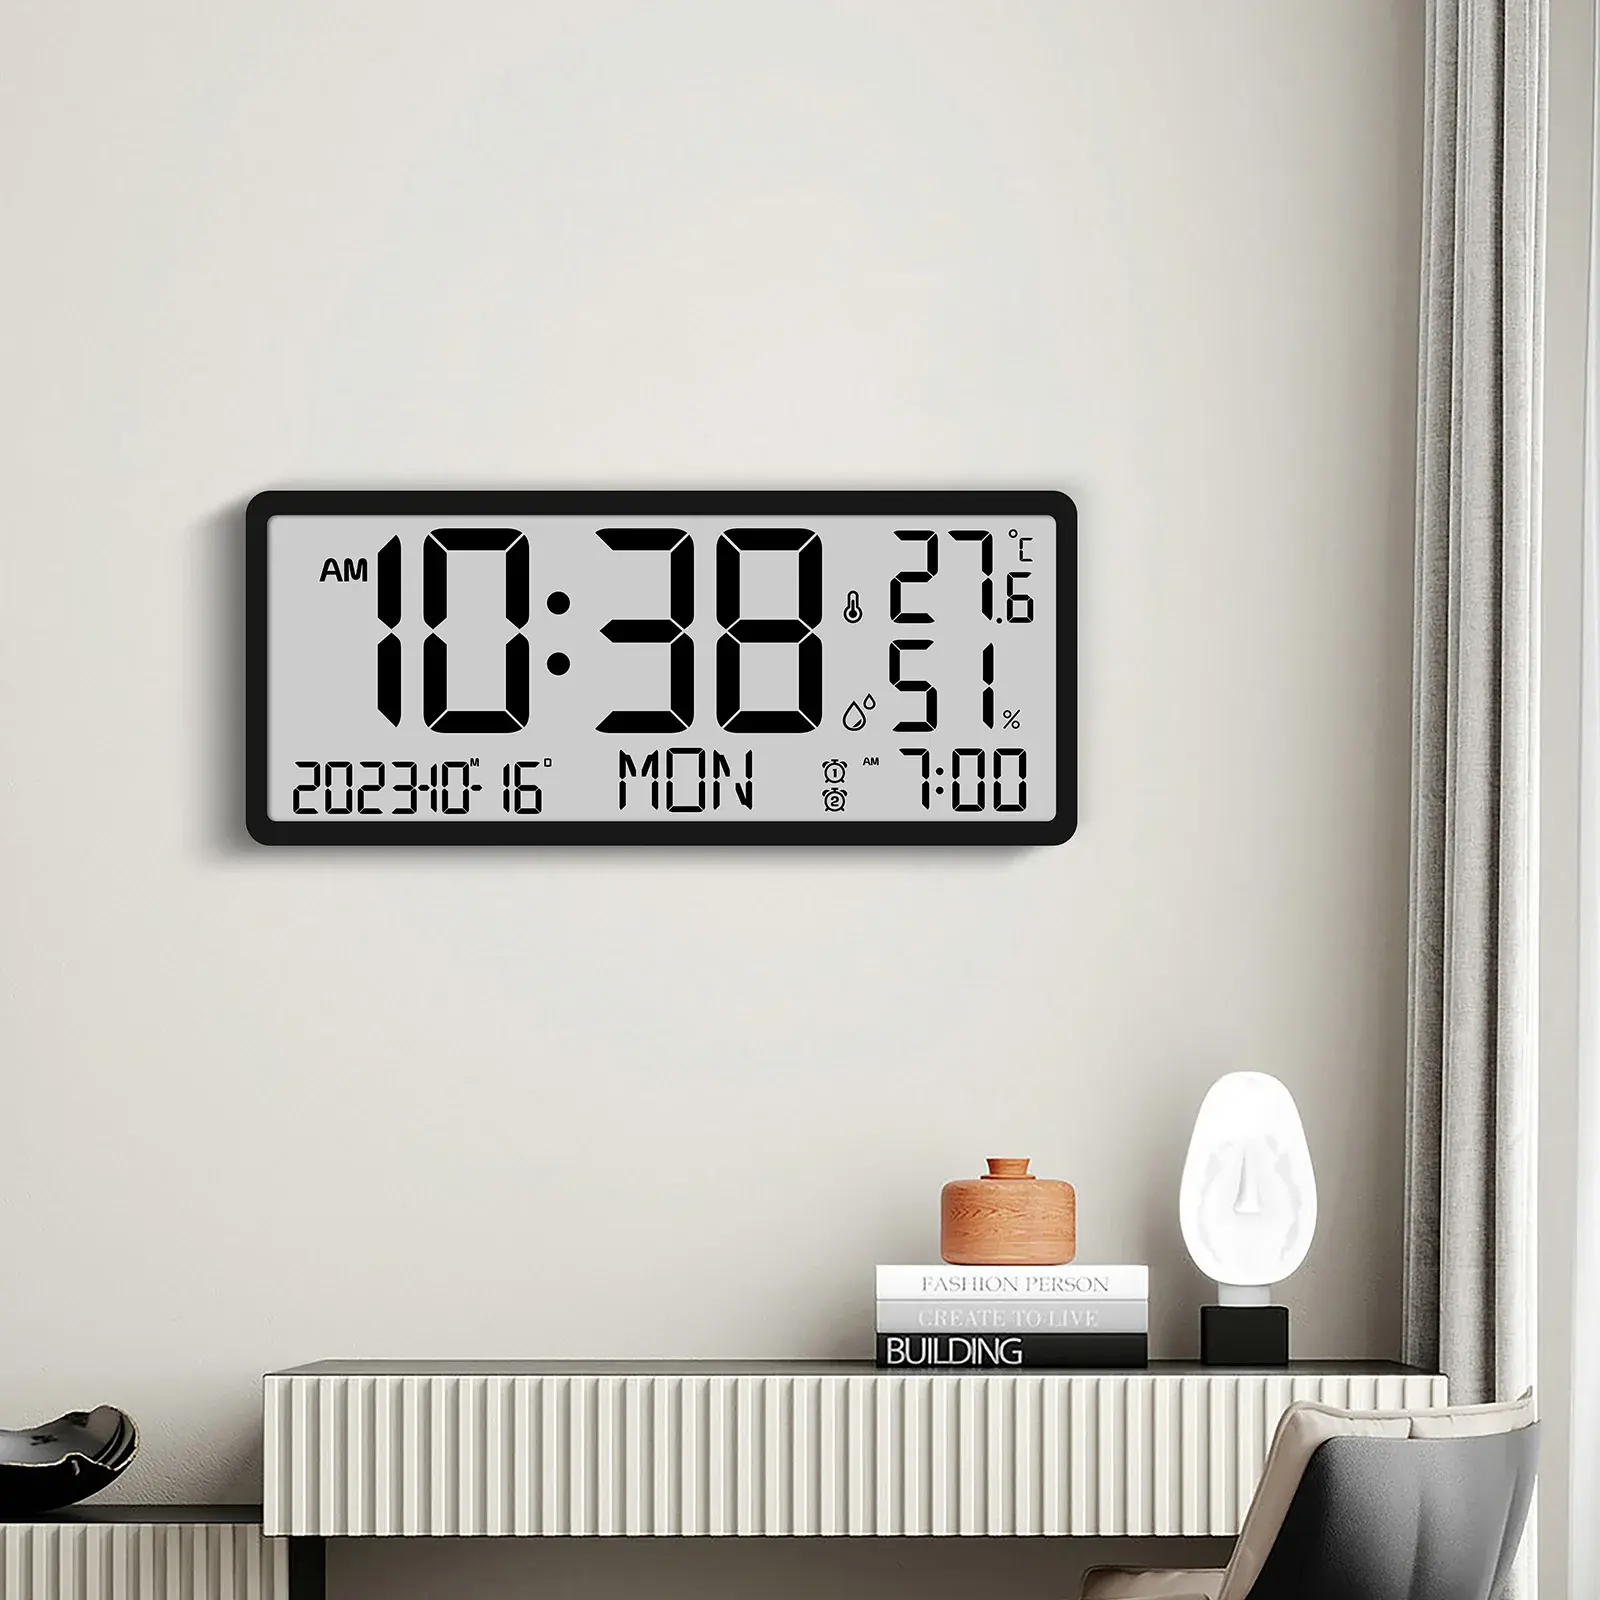 Jam meja dinding besar Jumbo, LCD Digital dengan kelembaban suhu dalam dan luar ruangan